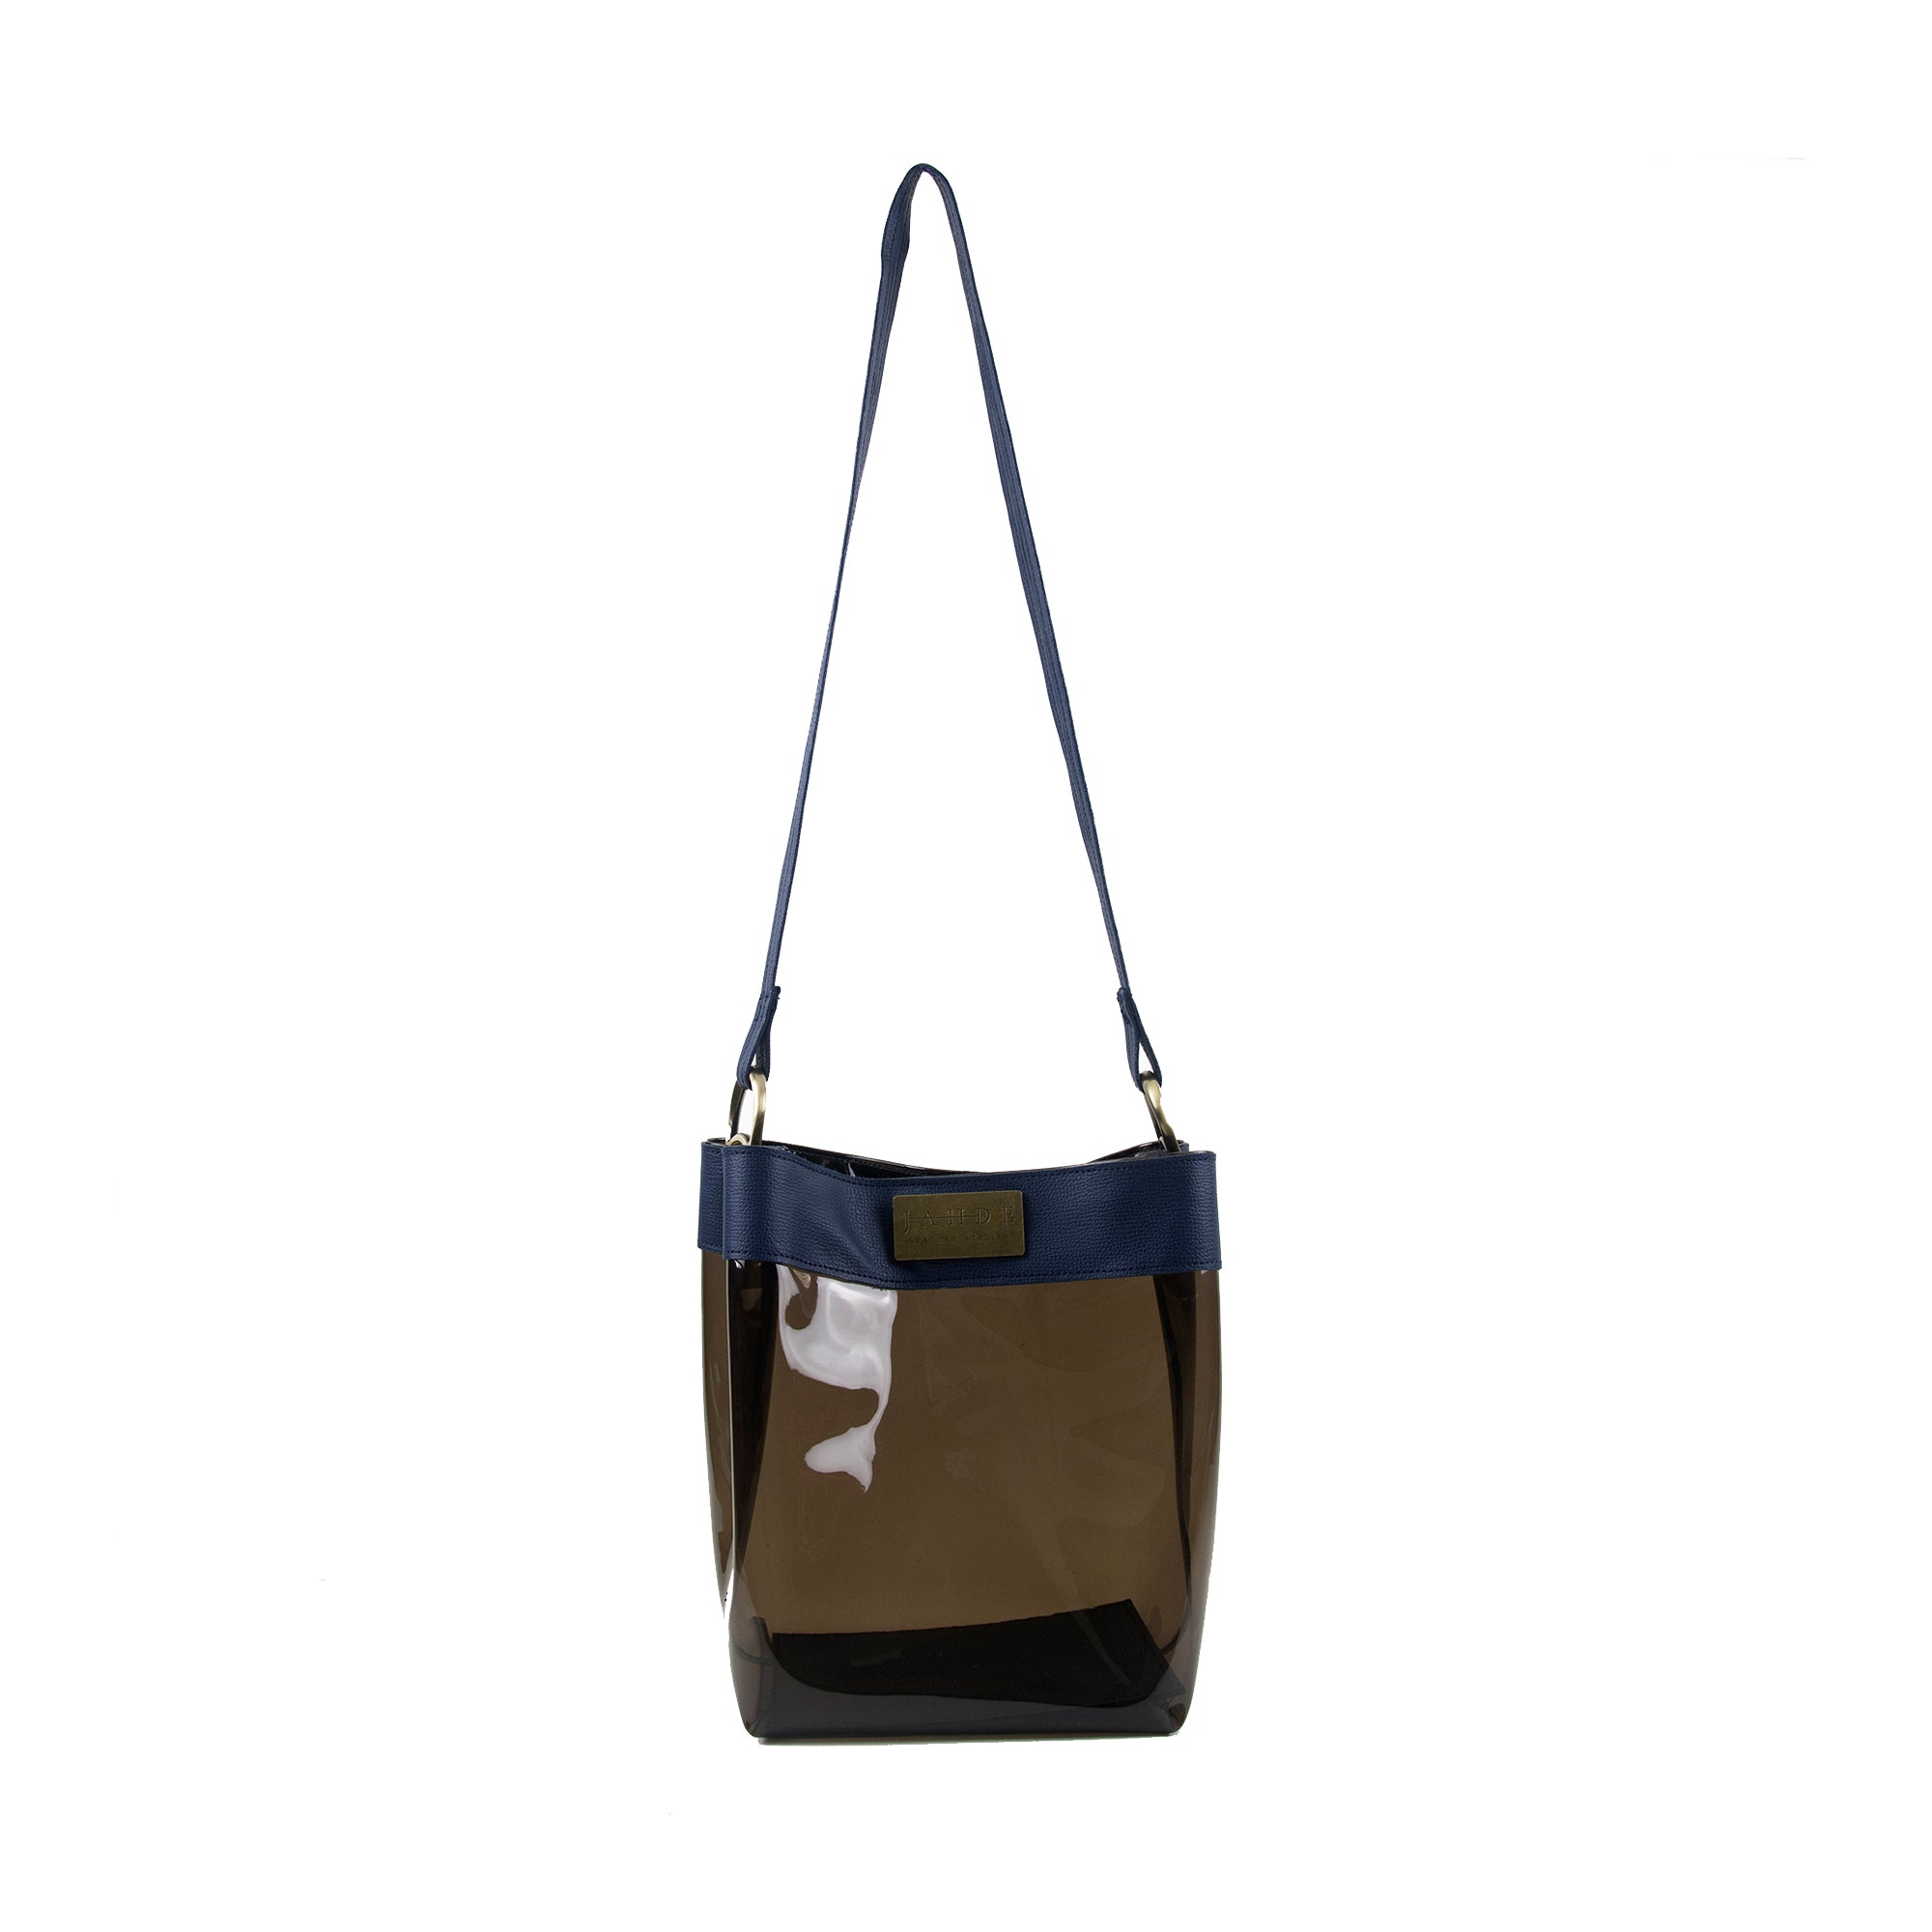 Jovie Bucket Bag – Alora Lane Boutique